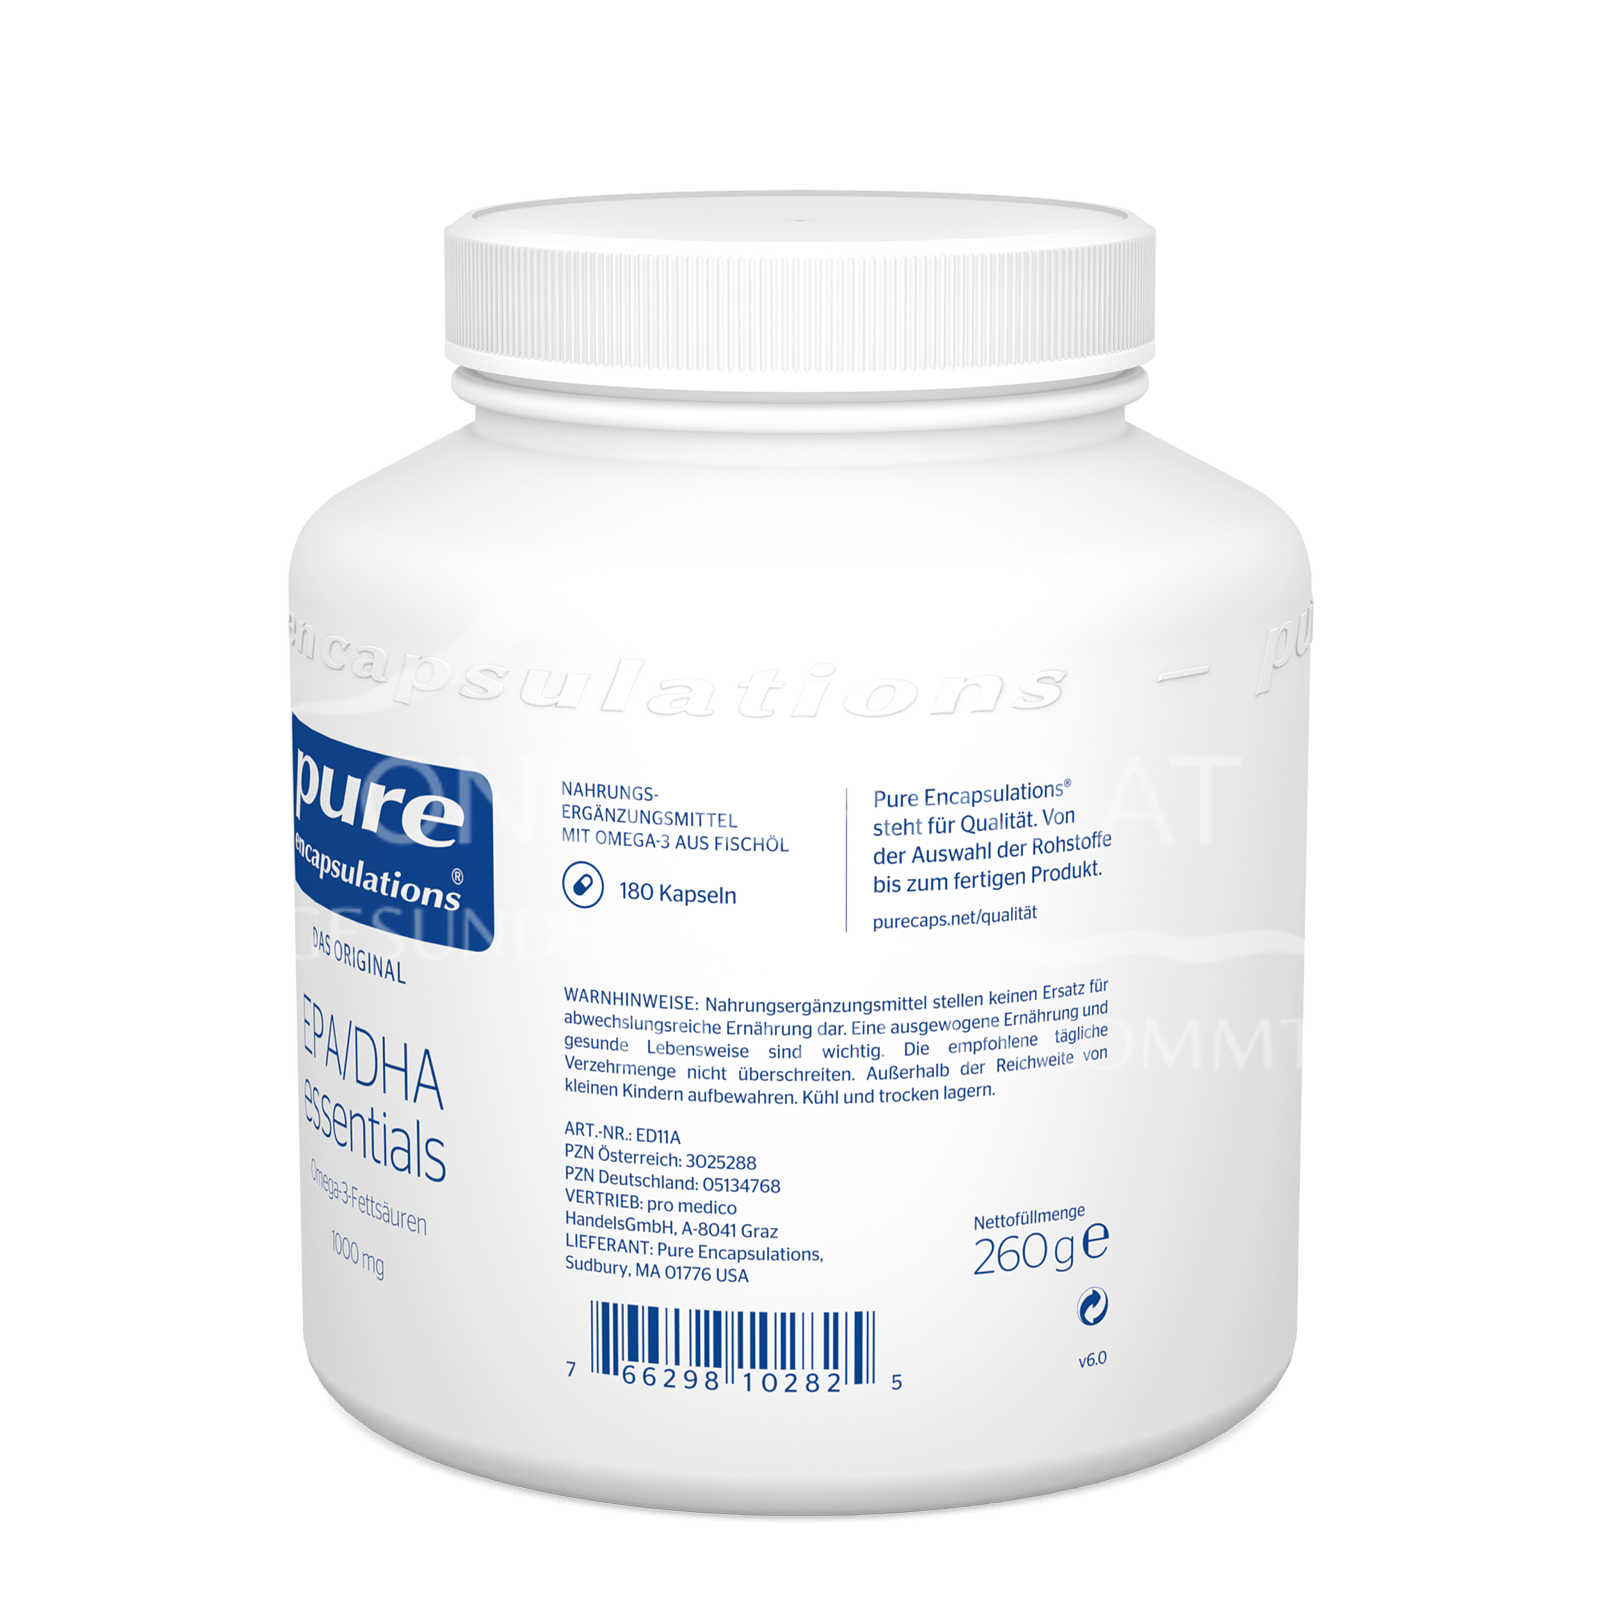 pure encapsulations® EPA/DHA essentials